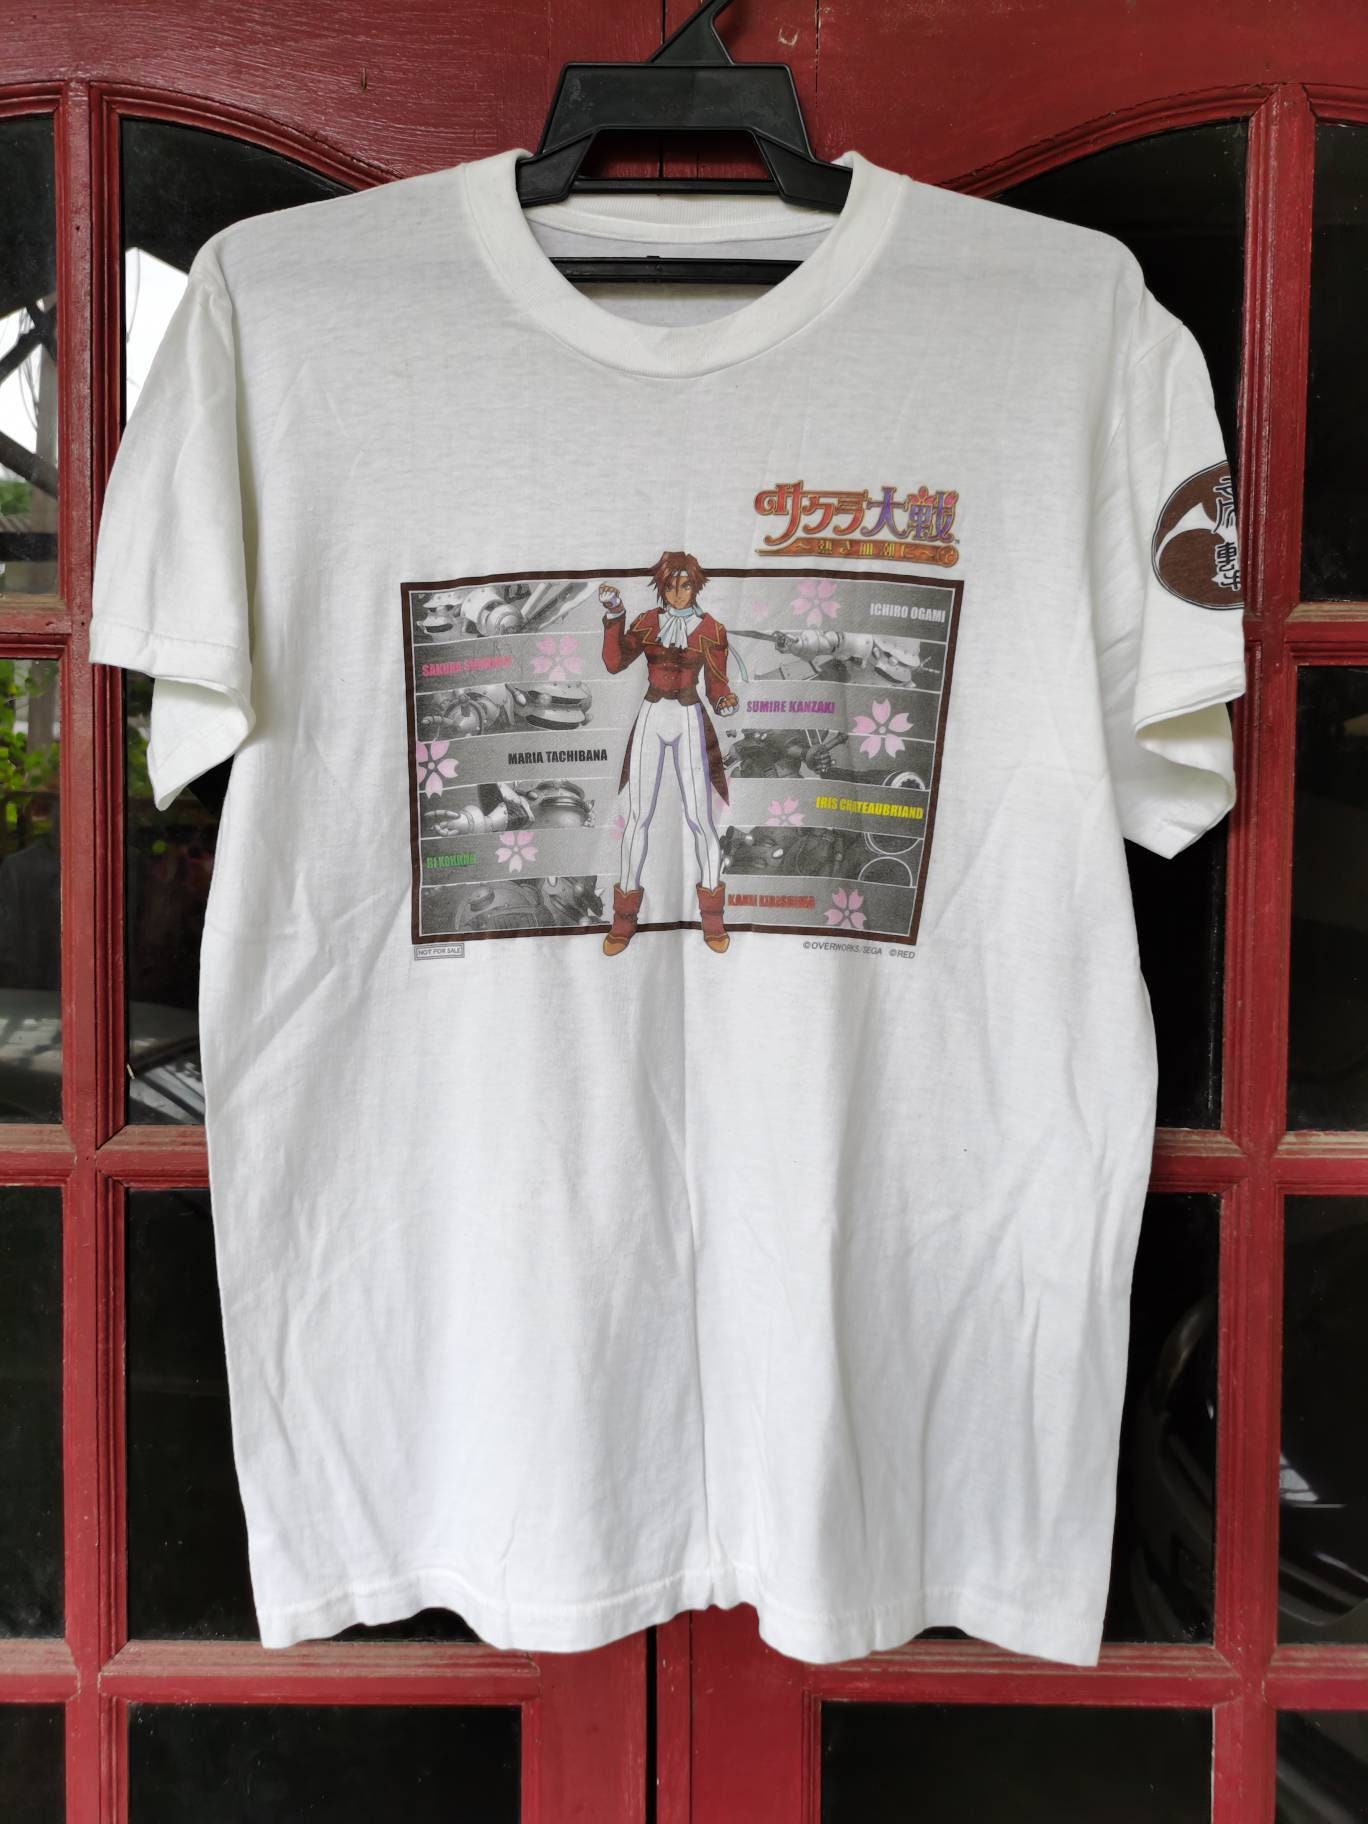 Stylistastore Vintage 2001 Allen Iverson NBA Finals NBA Sixers Majestic Basketball Jersey Adult Size L